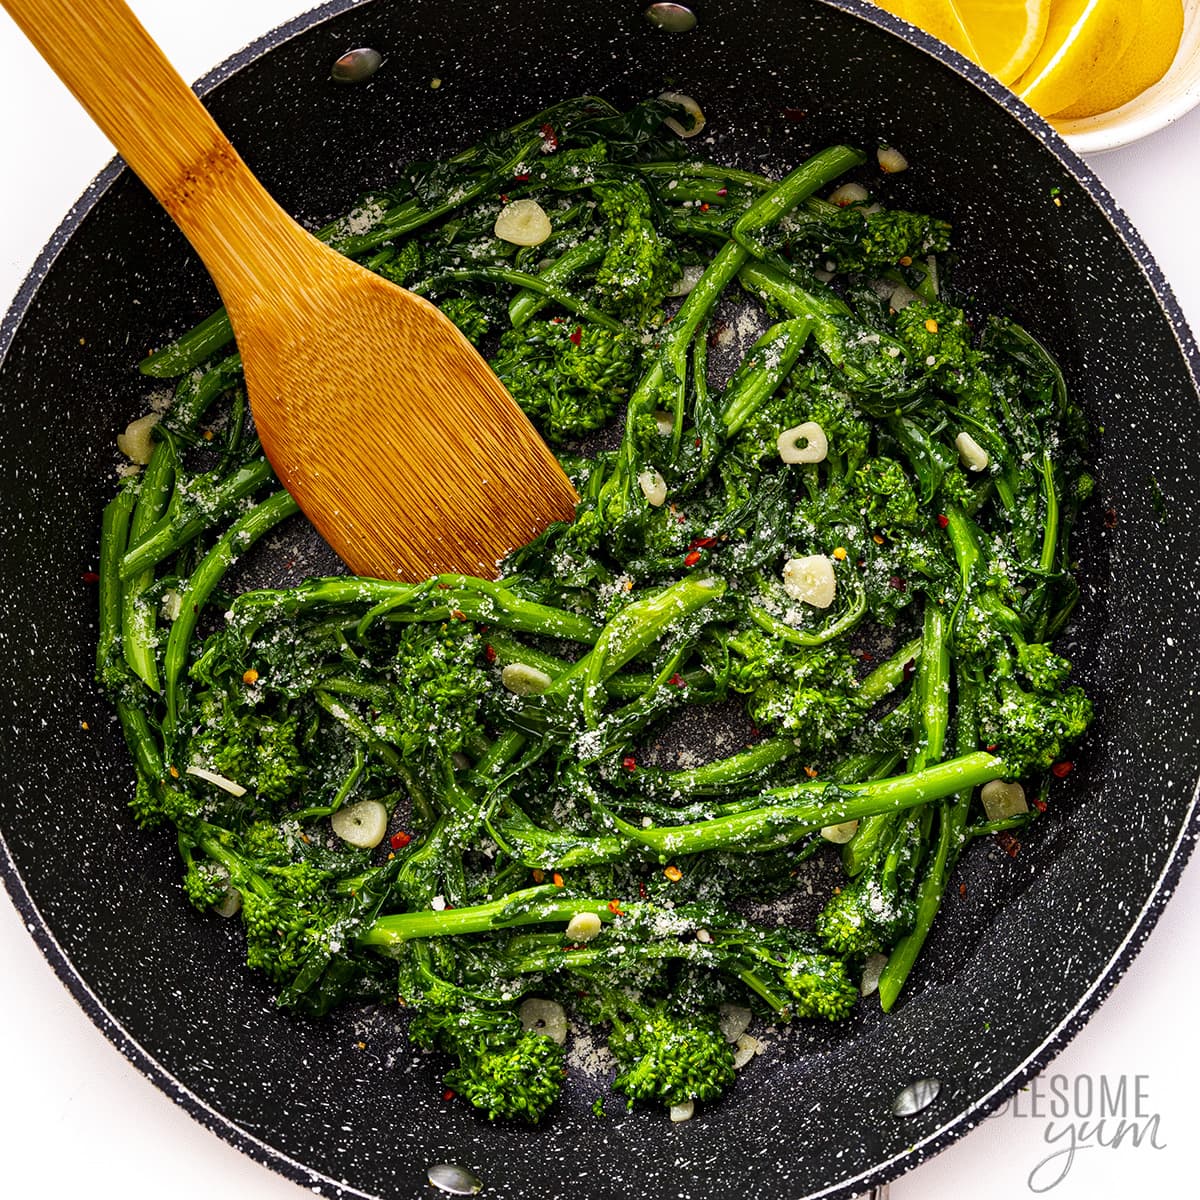 Sauteed broccoli rabe with parmesan and lemon wedges.